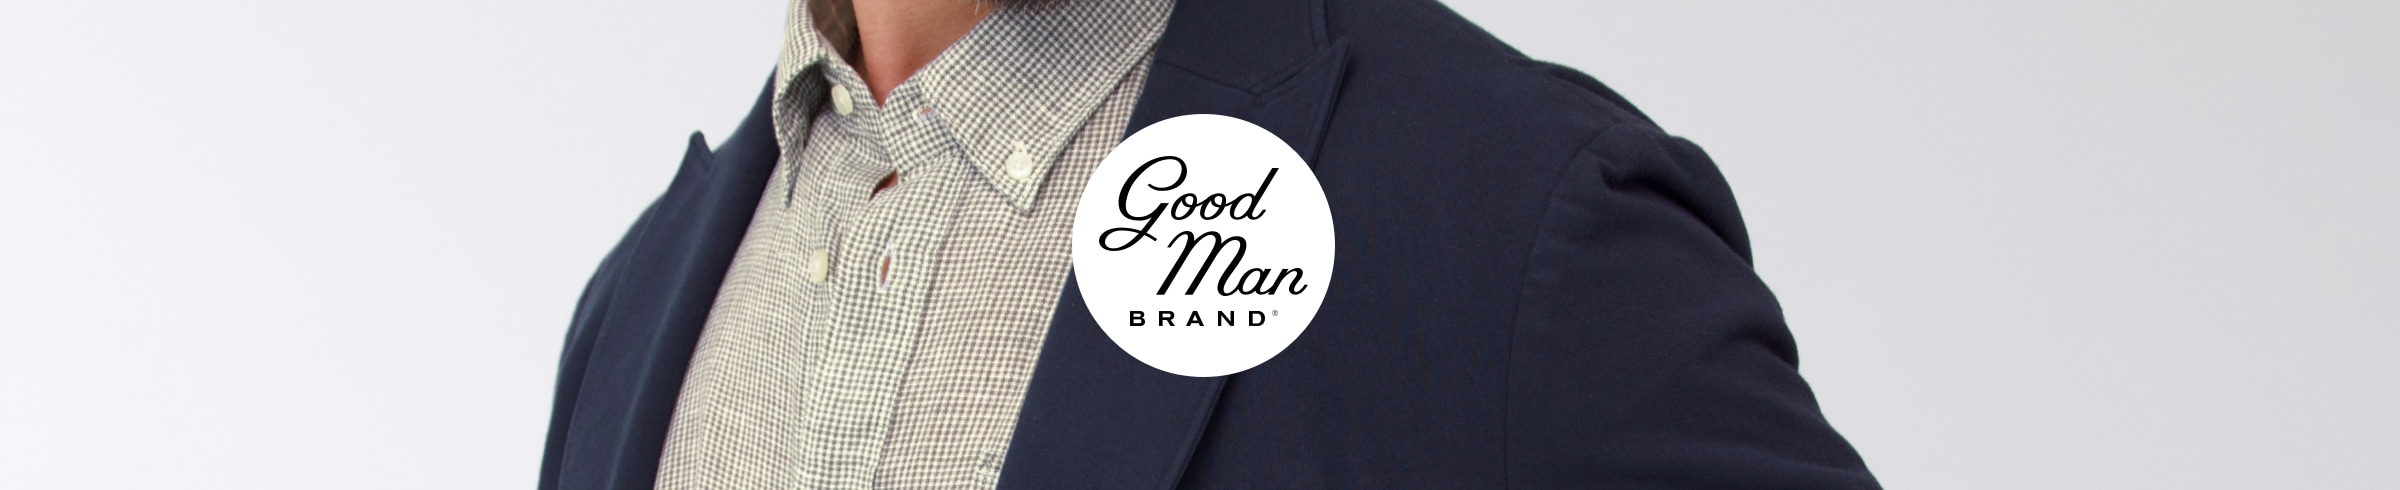 Good Man Brand Apparel